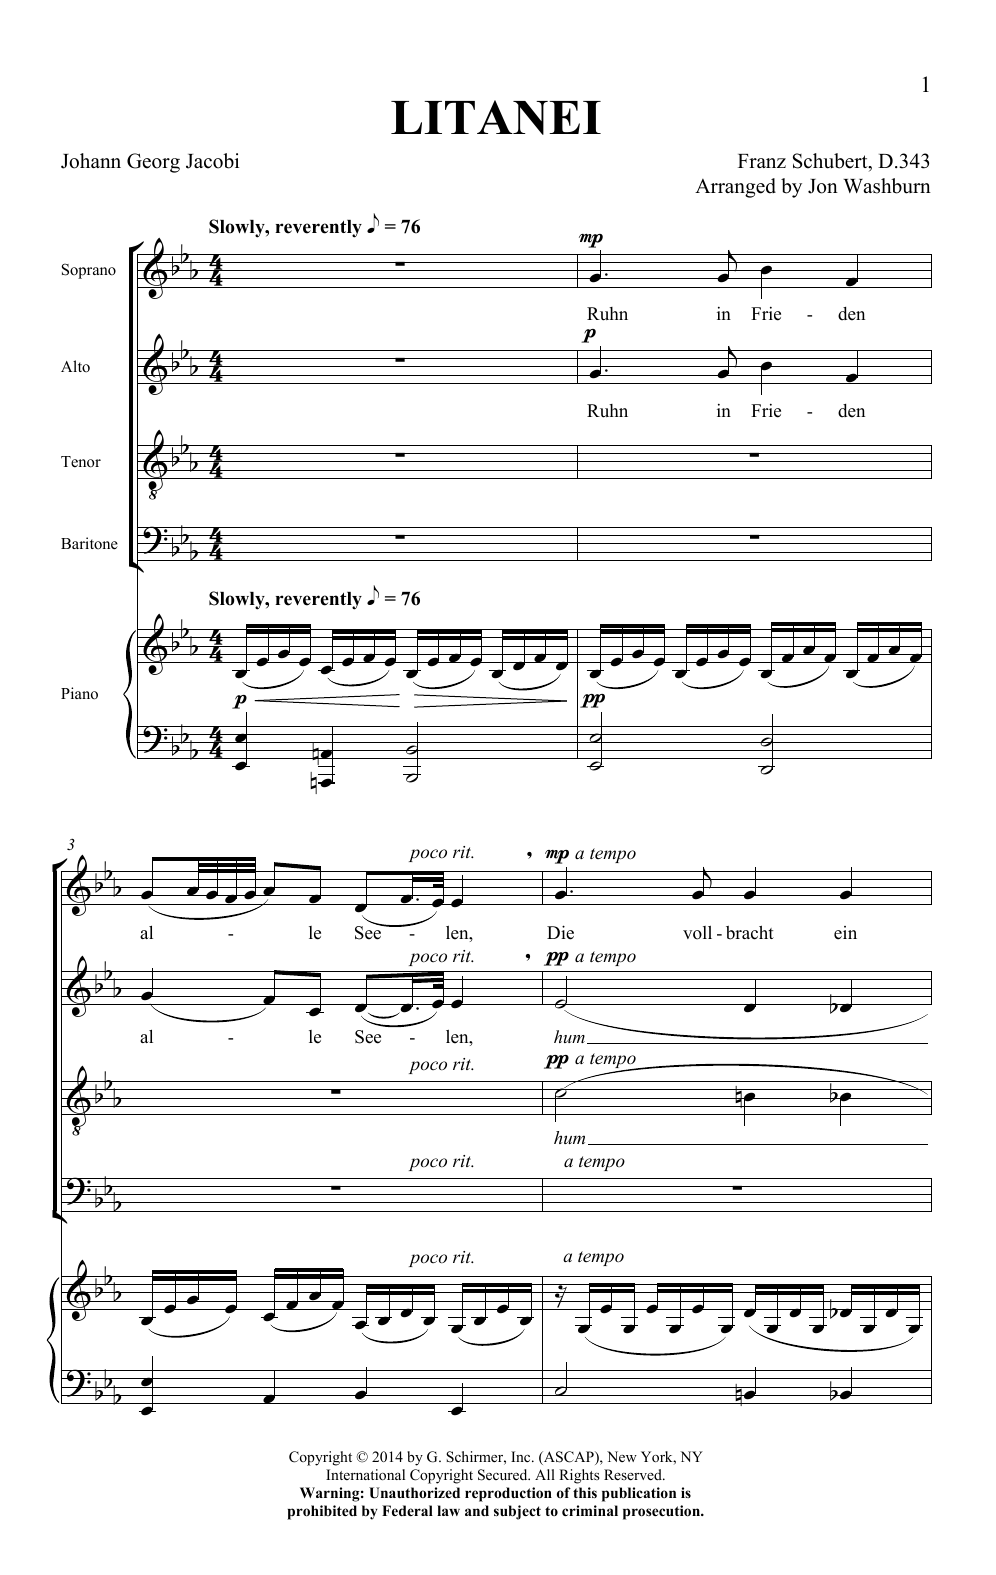 Jon Washburn Litanei Sheet Music Notes & Chords for SATB - Download or Print PDF